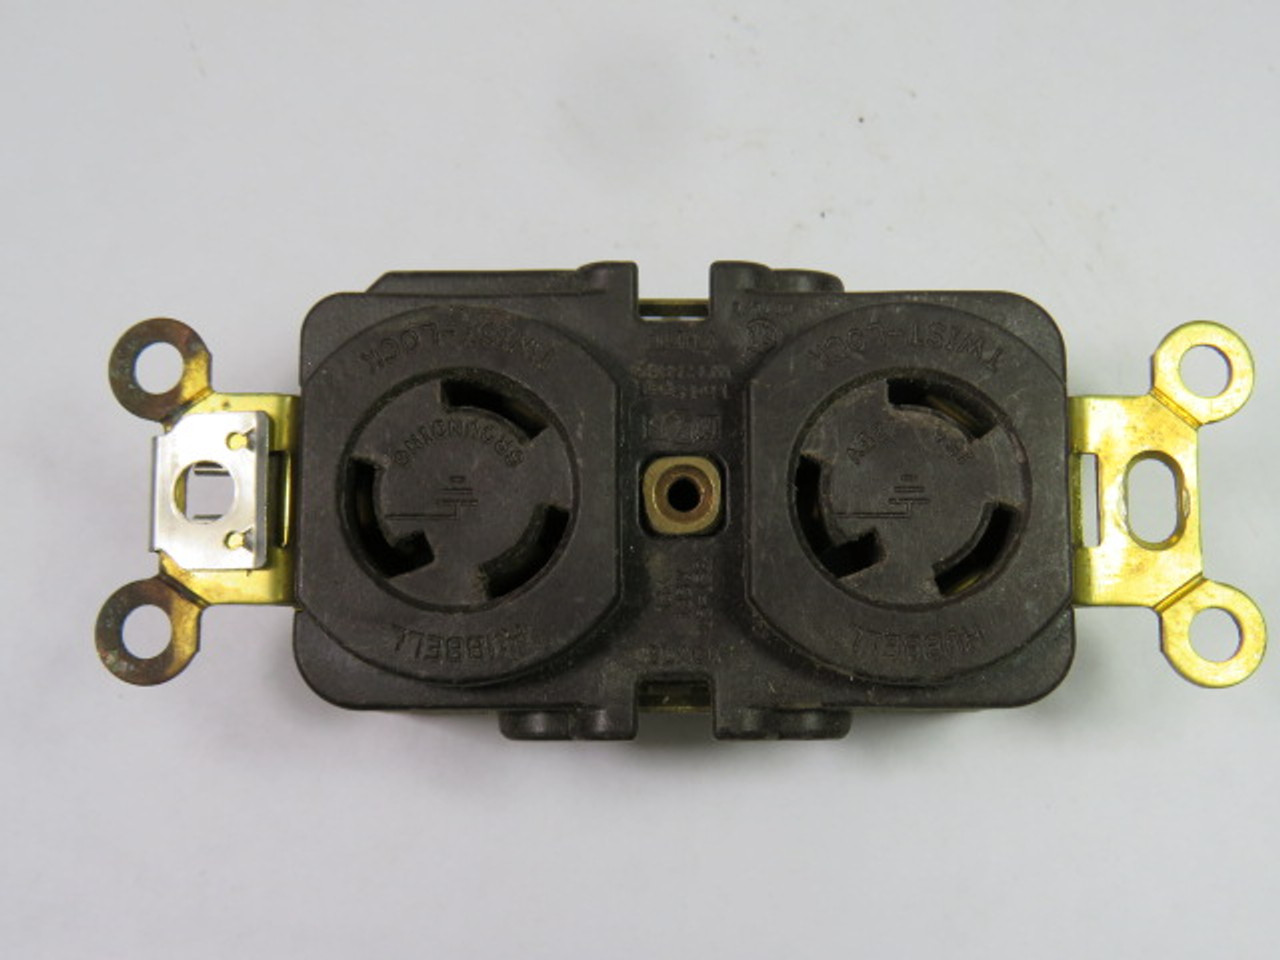 Hubbell HBL4700 Twist-Lock Duplex Receptacle 15A 125V USED